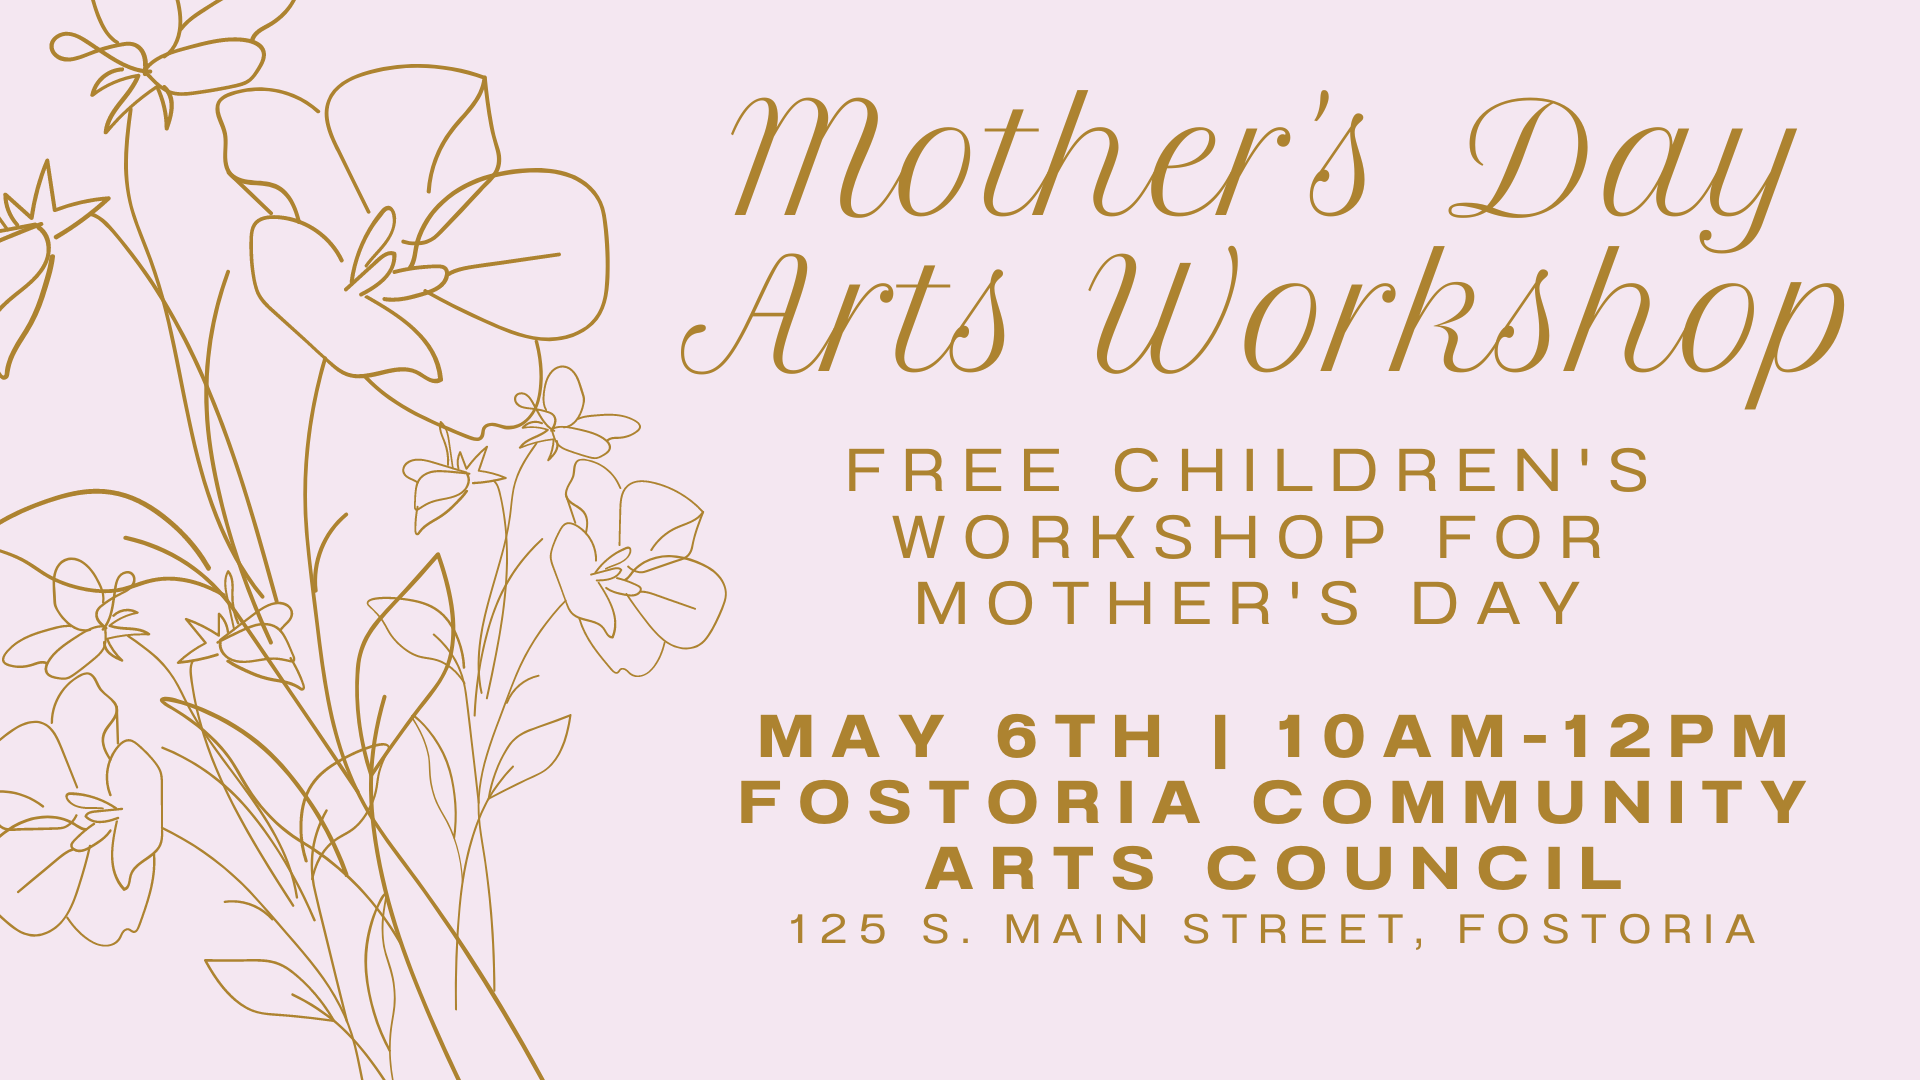 Fostoria Community Arts Council Mother's Day Arts Workshop